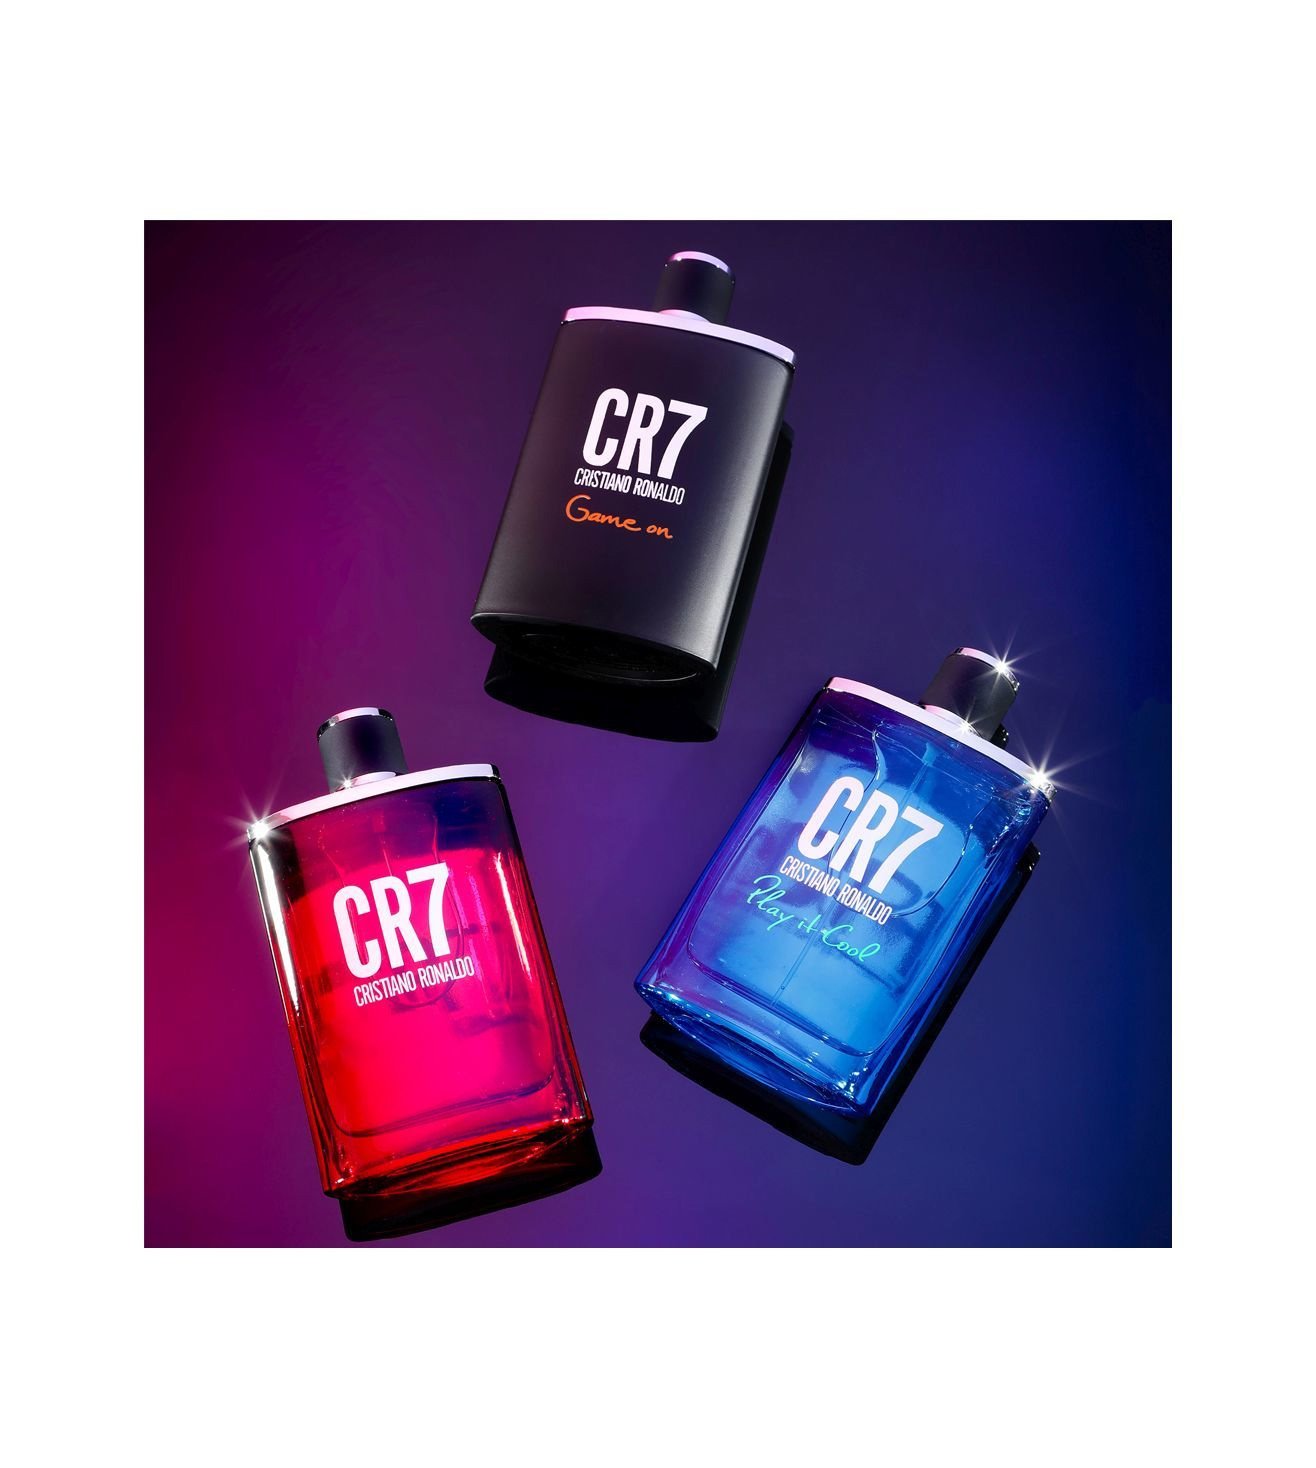 Cristiano Ronaldo's CR7 Fragrance forays into the Indian market